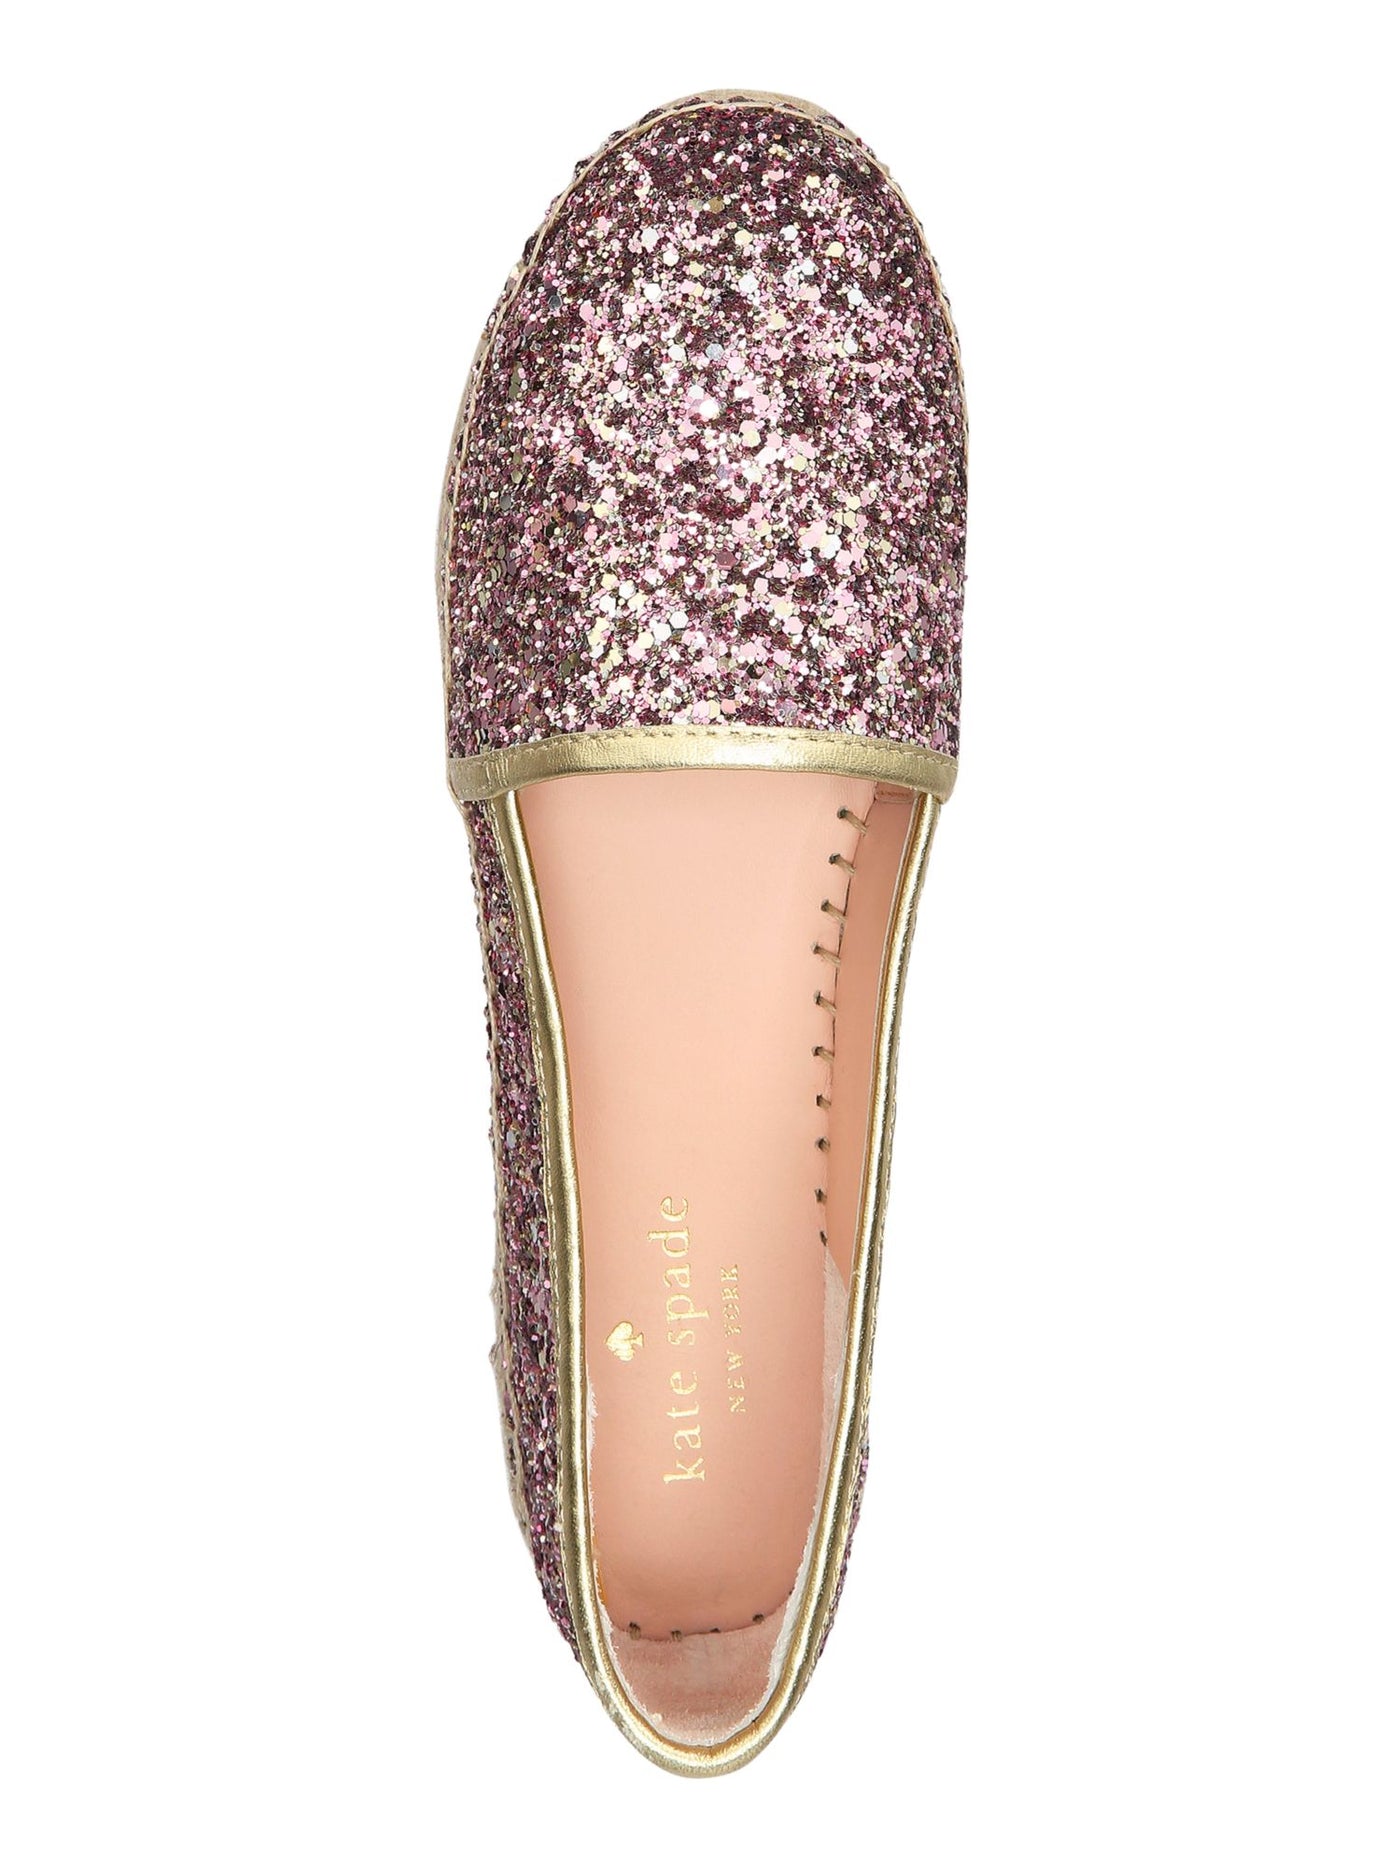 KATE SPADE NEW YORK Womens Beige Glitter Linds Round Toe Platform Slip On Leather Espadrille Shoes 6.5 M